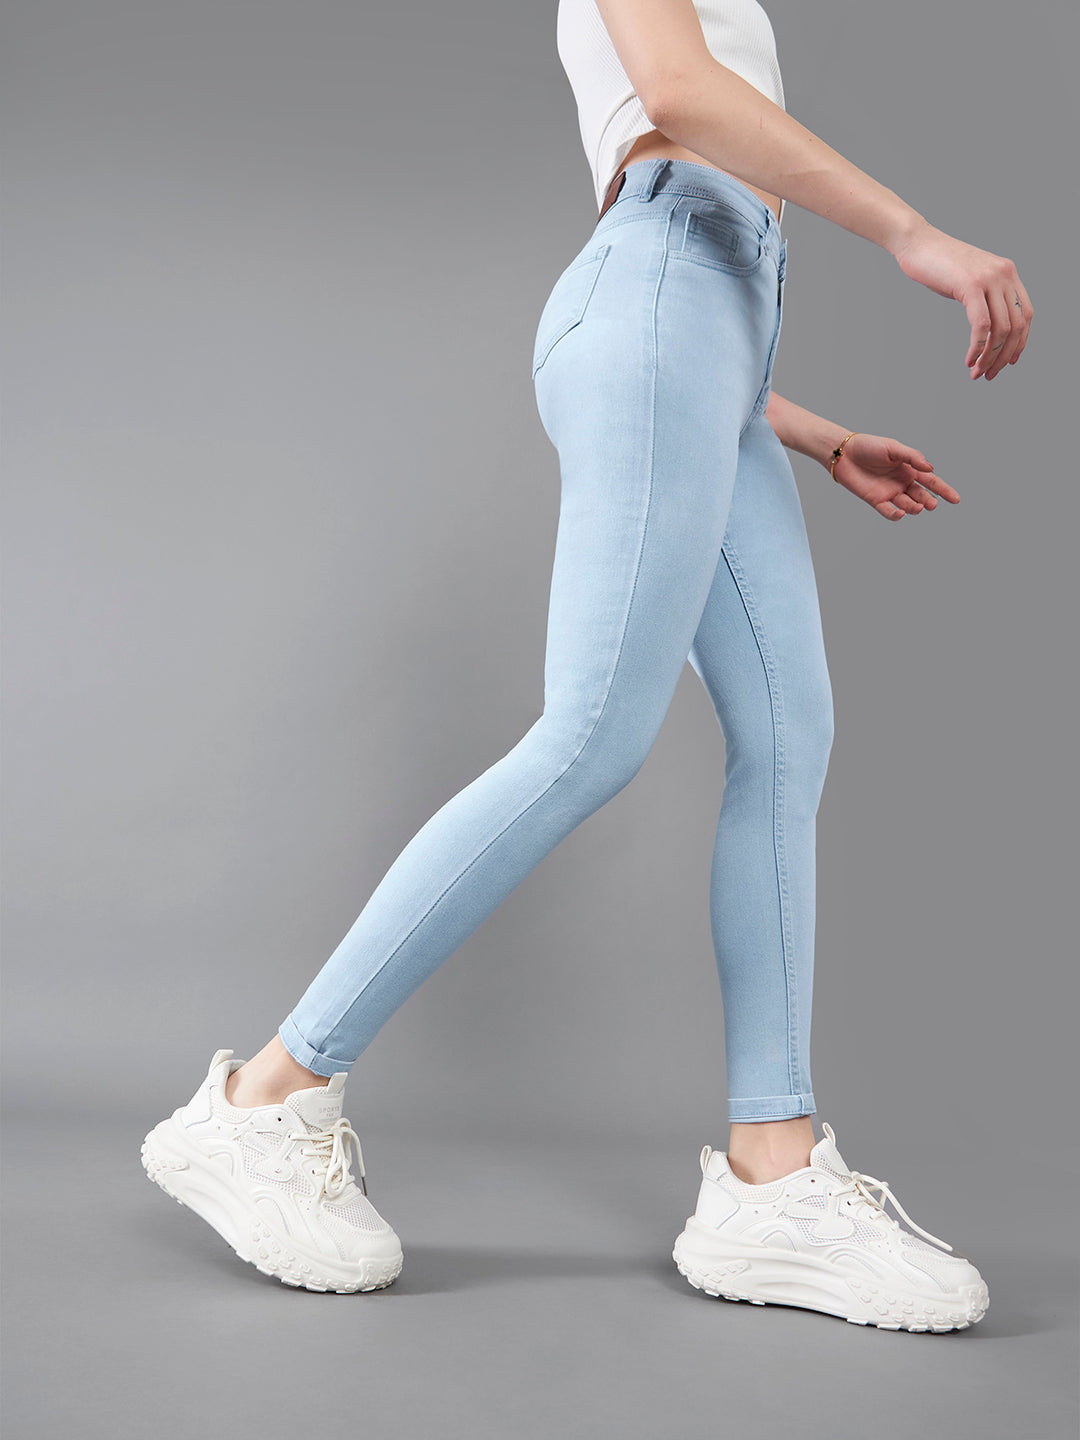 Women's Light Blue Skinny High Rise Distressed Regular Length Ice Wash Denim Jeans